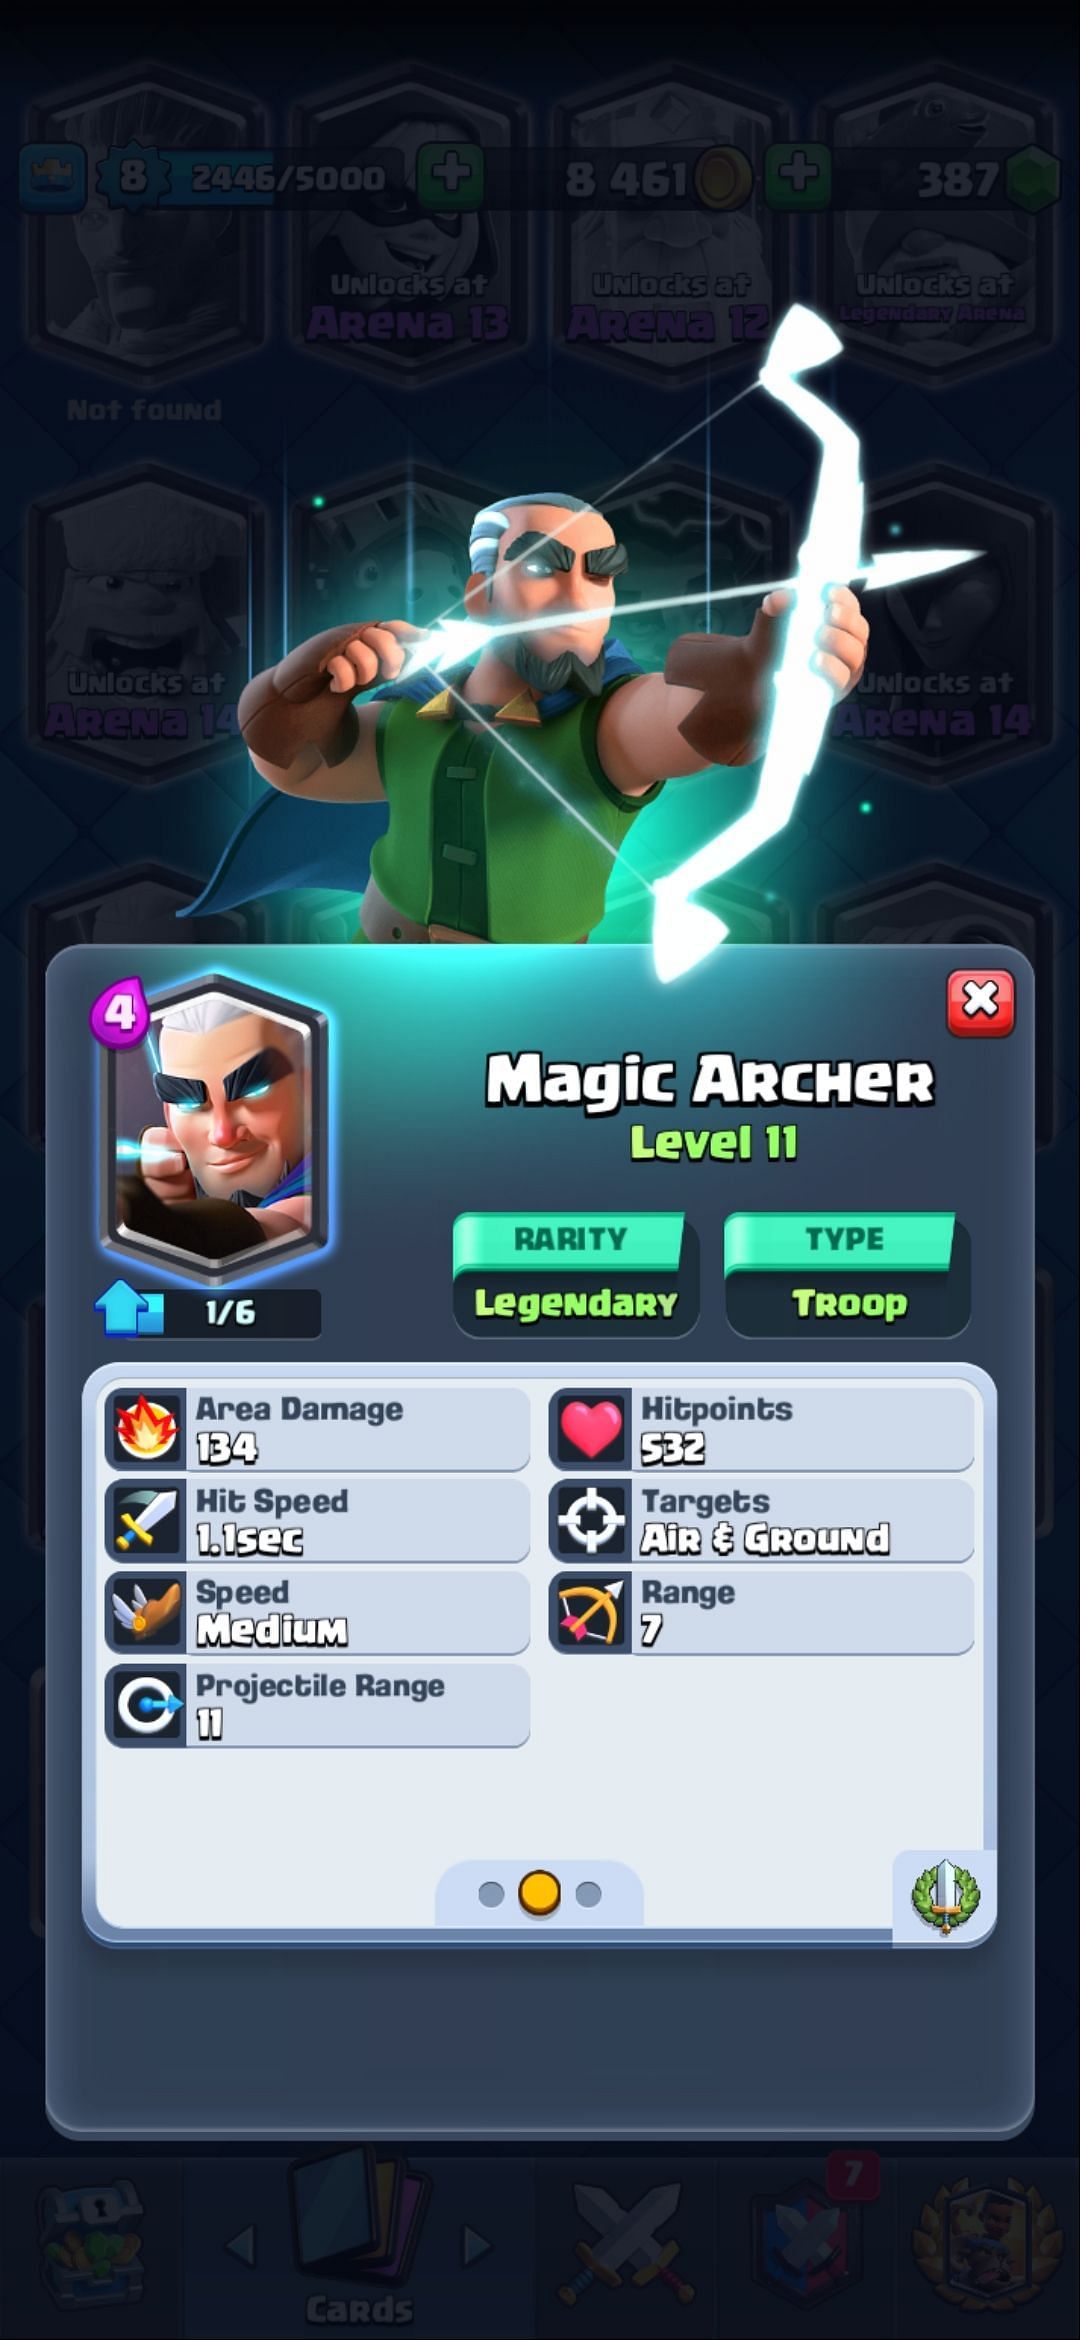 The Magic Archer card (Image via Sportskeeda)